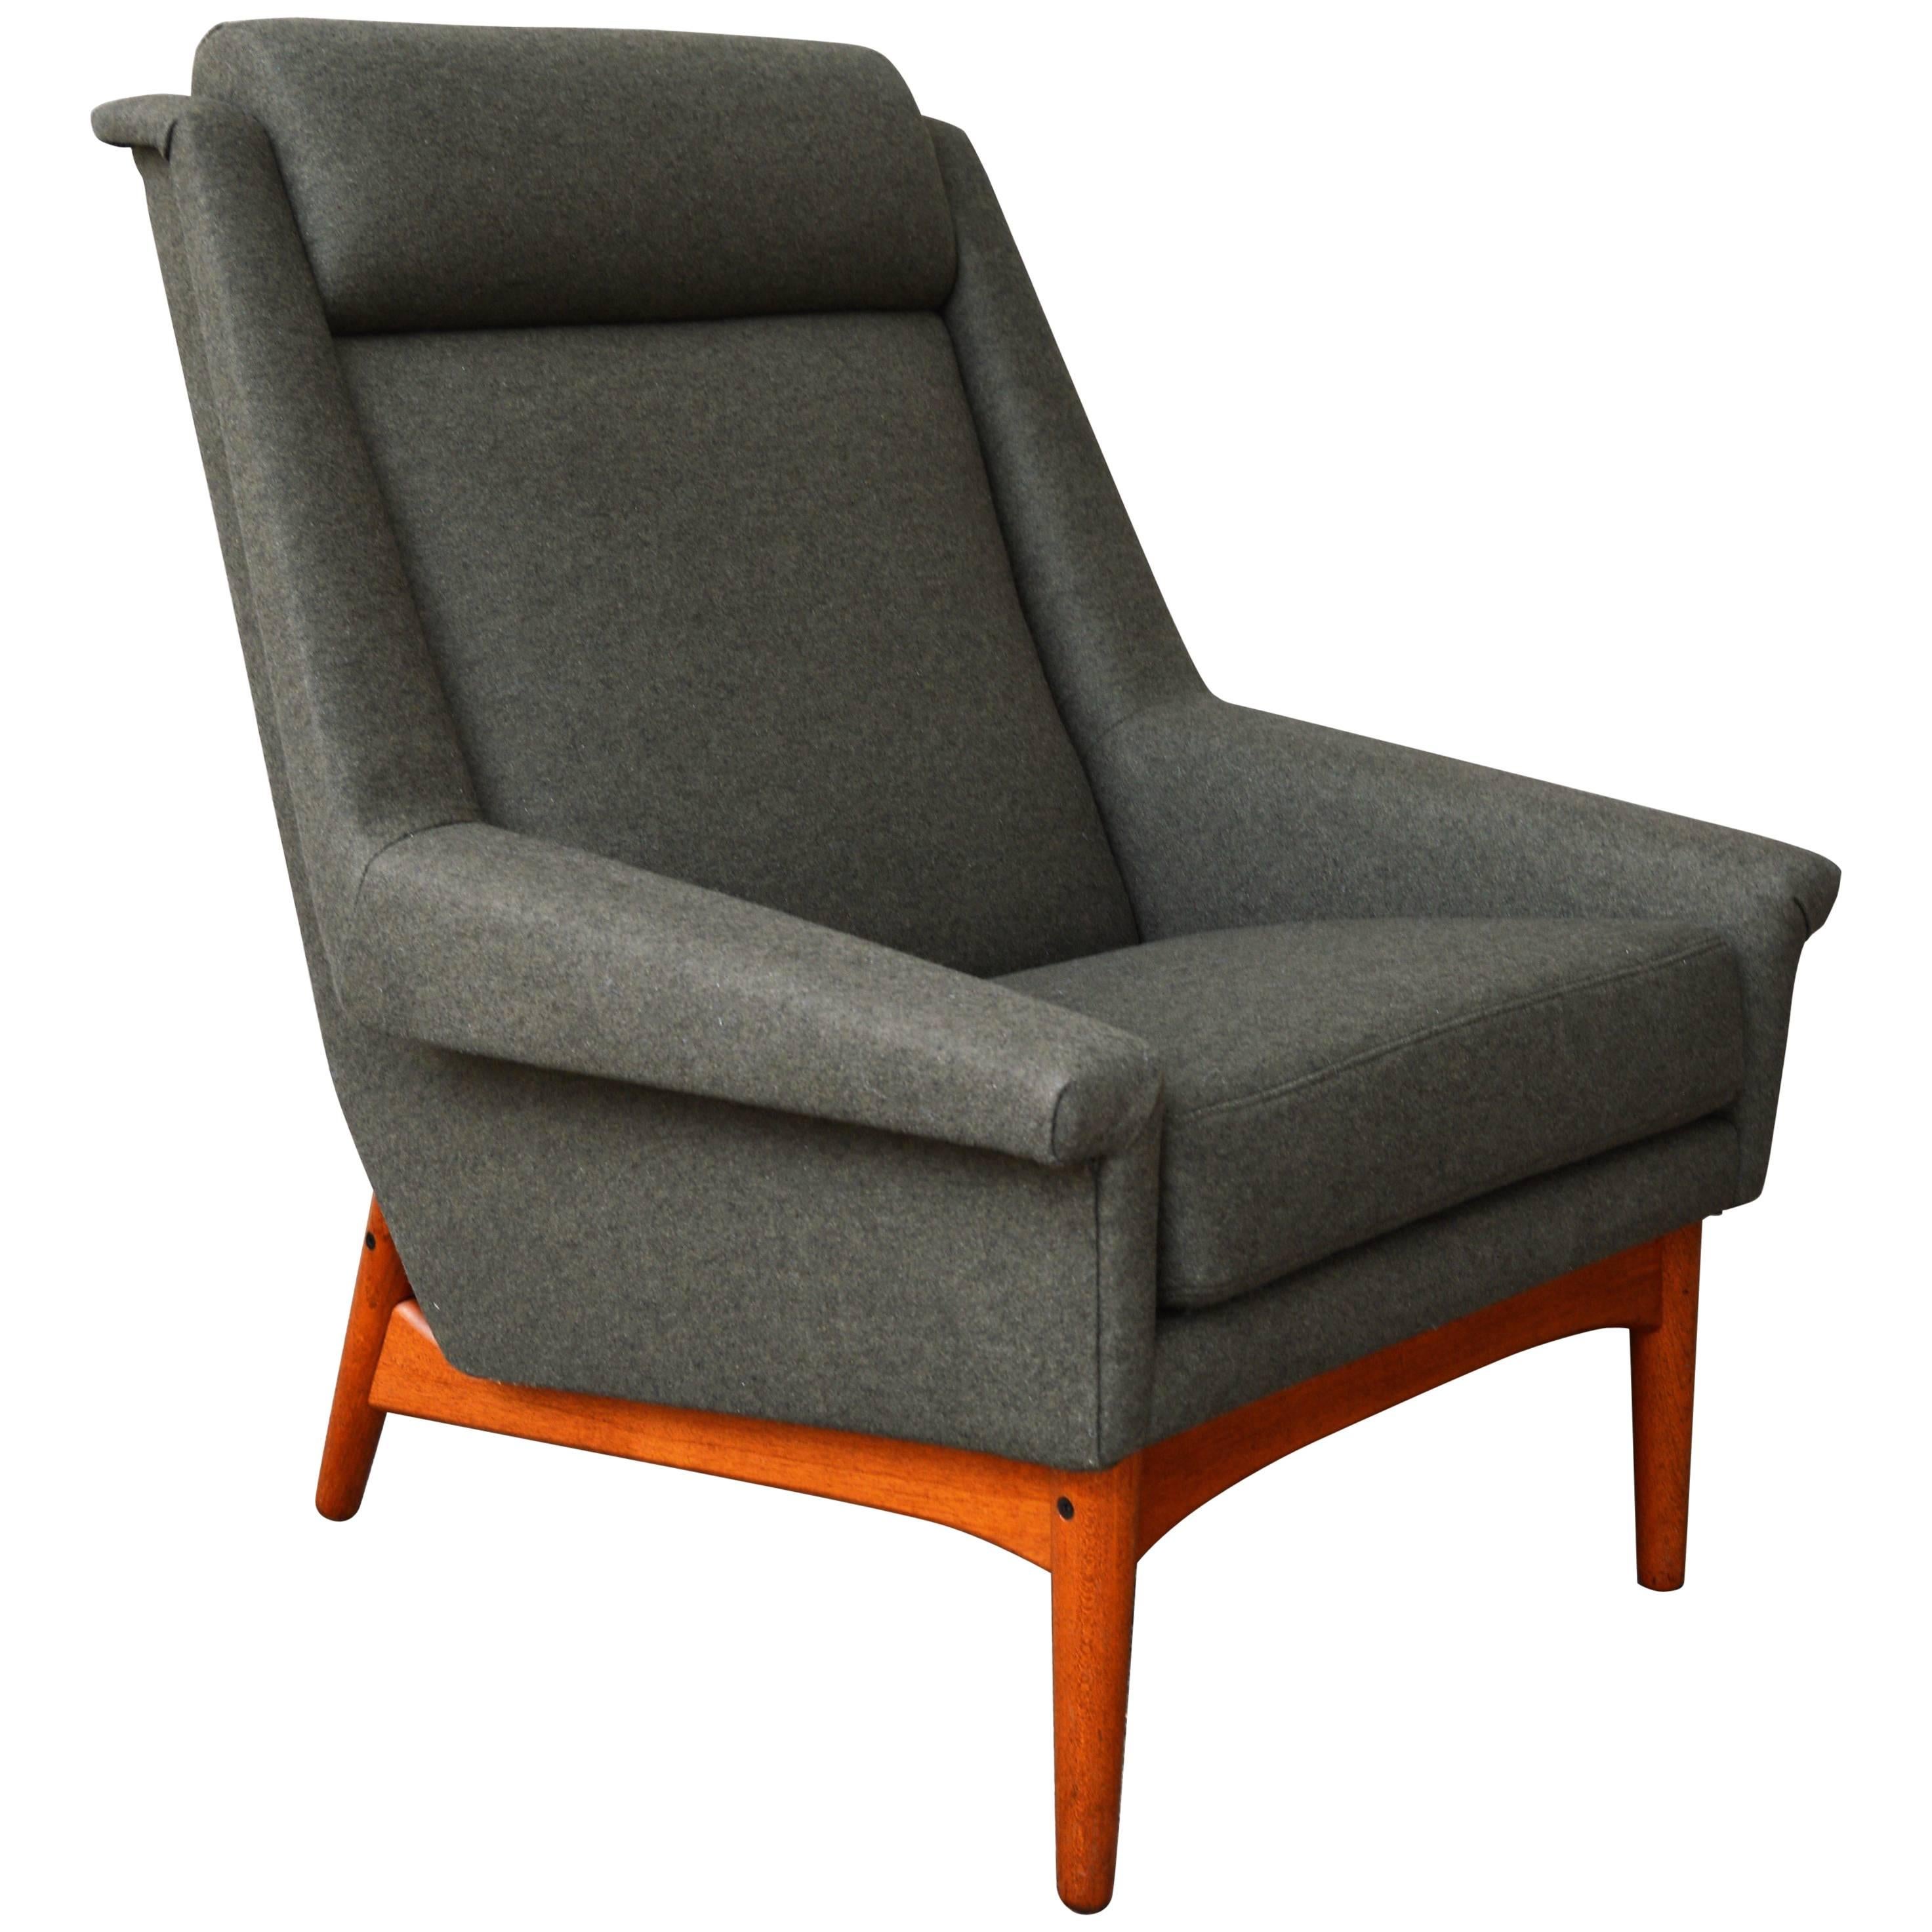 Bramin Teak Base High Back Lounge Chair in Olive Green Felted Wool, Denmark